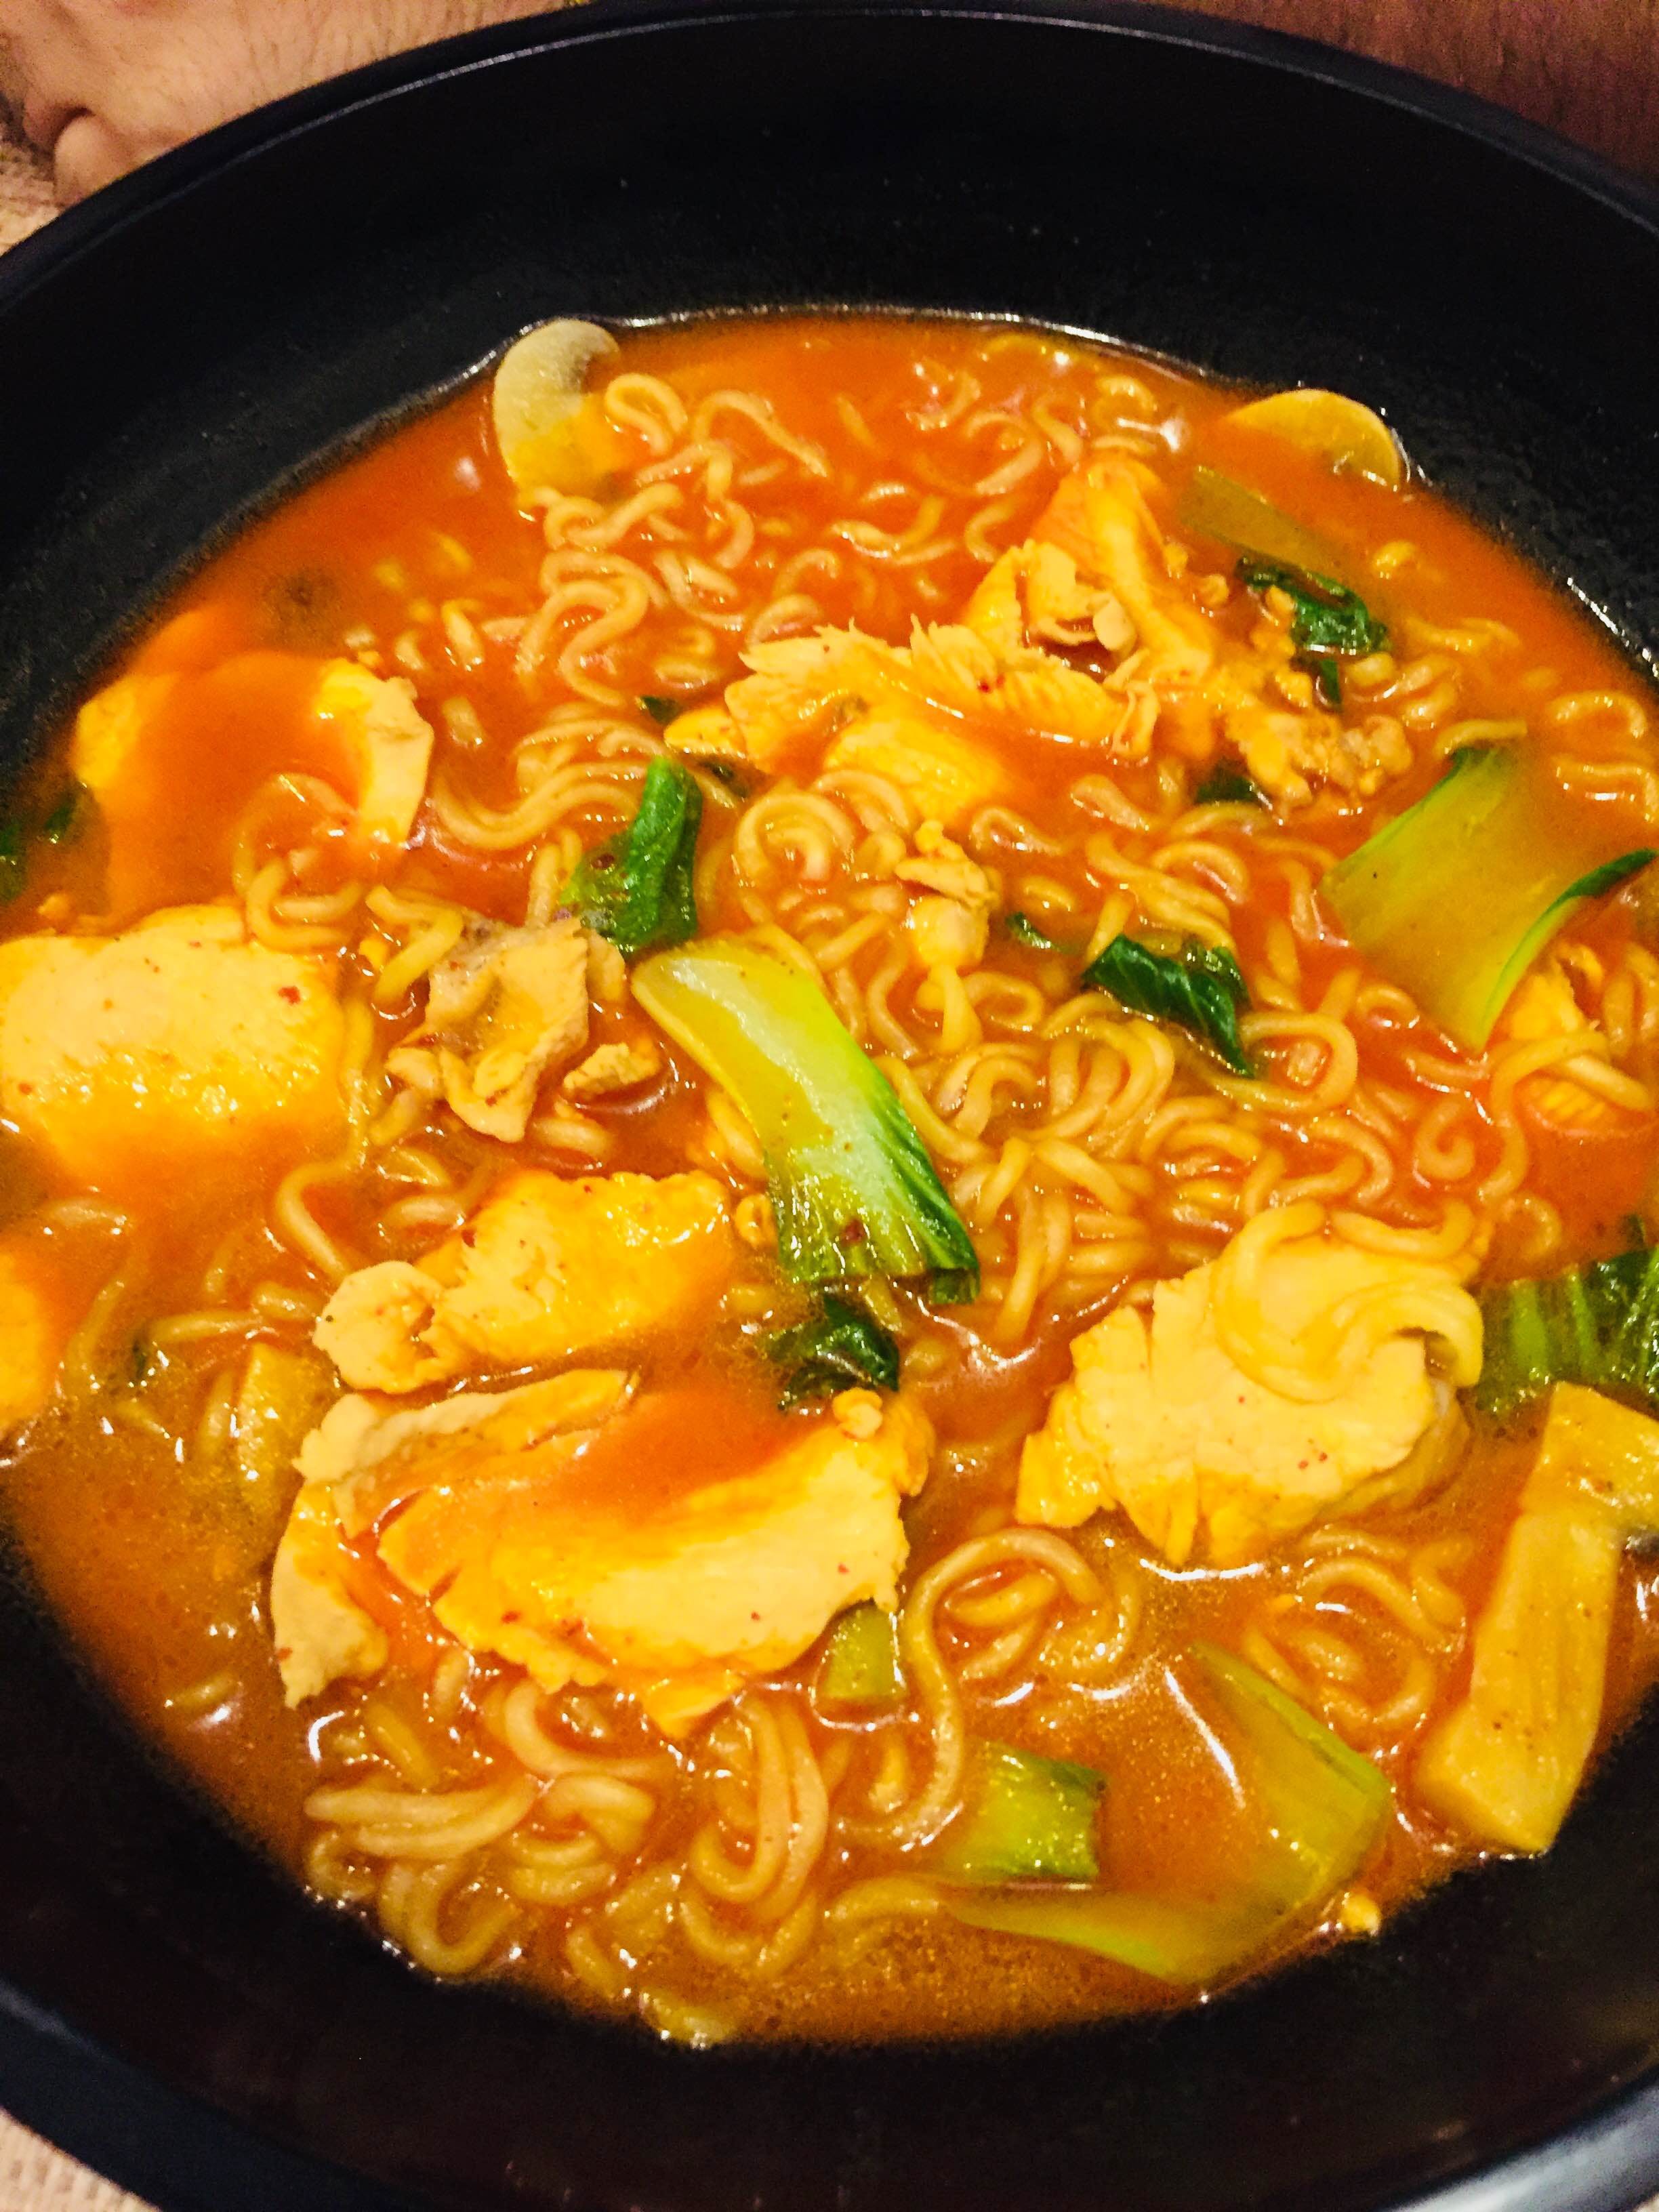 Dish,Food,Cuisine,Budae jjigae,Noodle soup,Sundubu jjigae,Curry chicken noodles,Jjigae,Ingredient,Meat